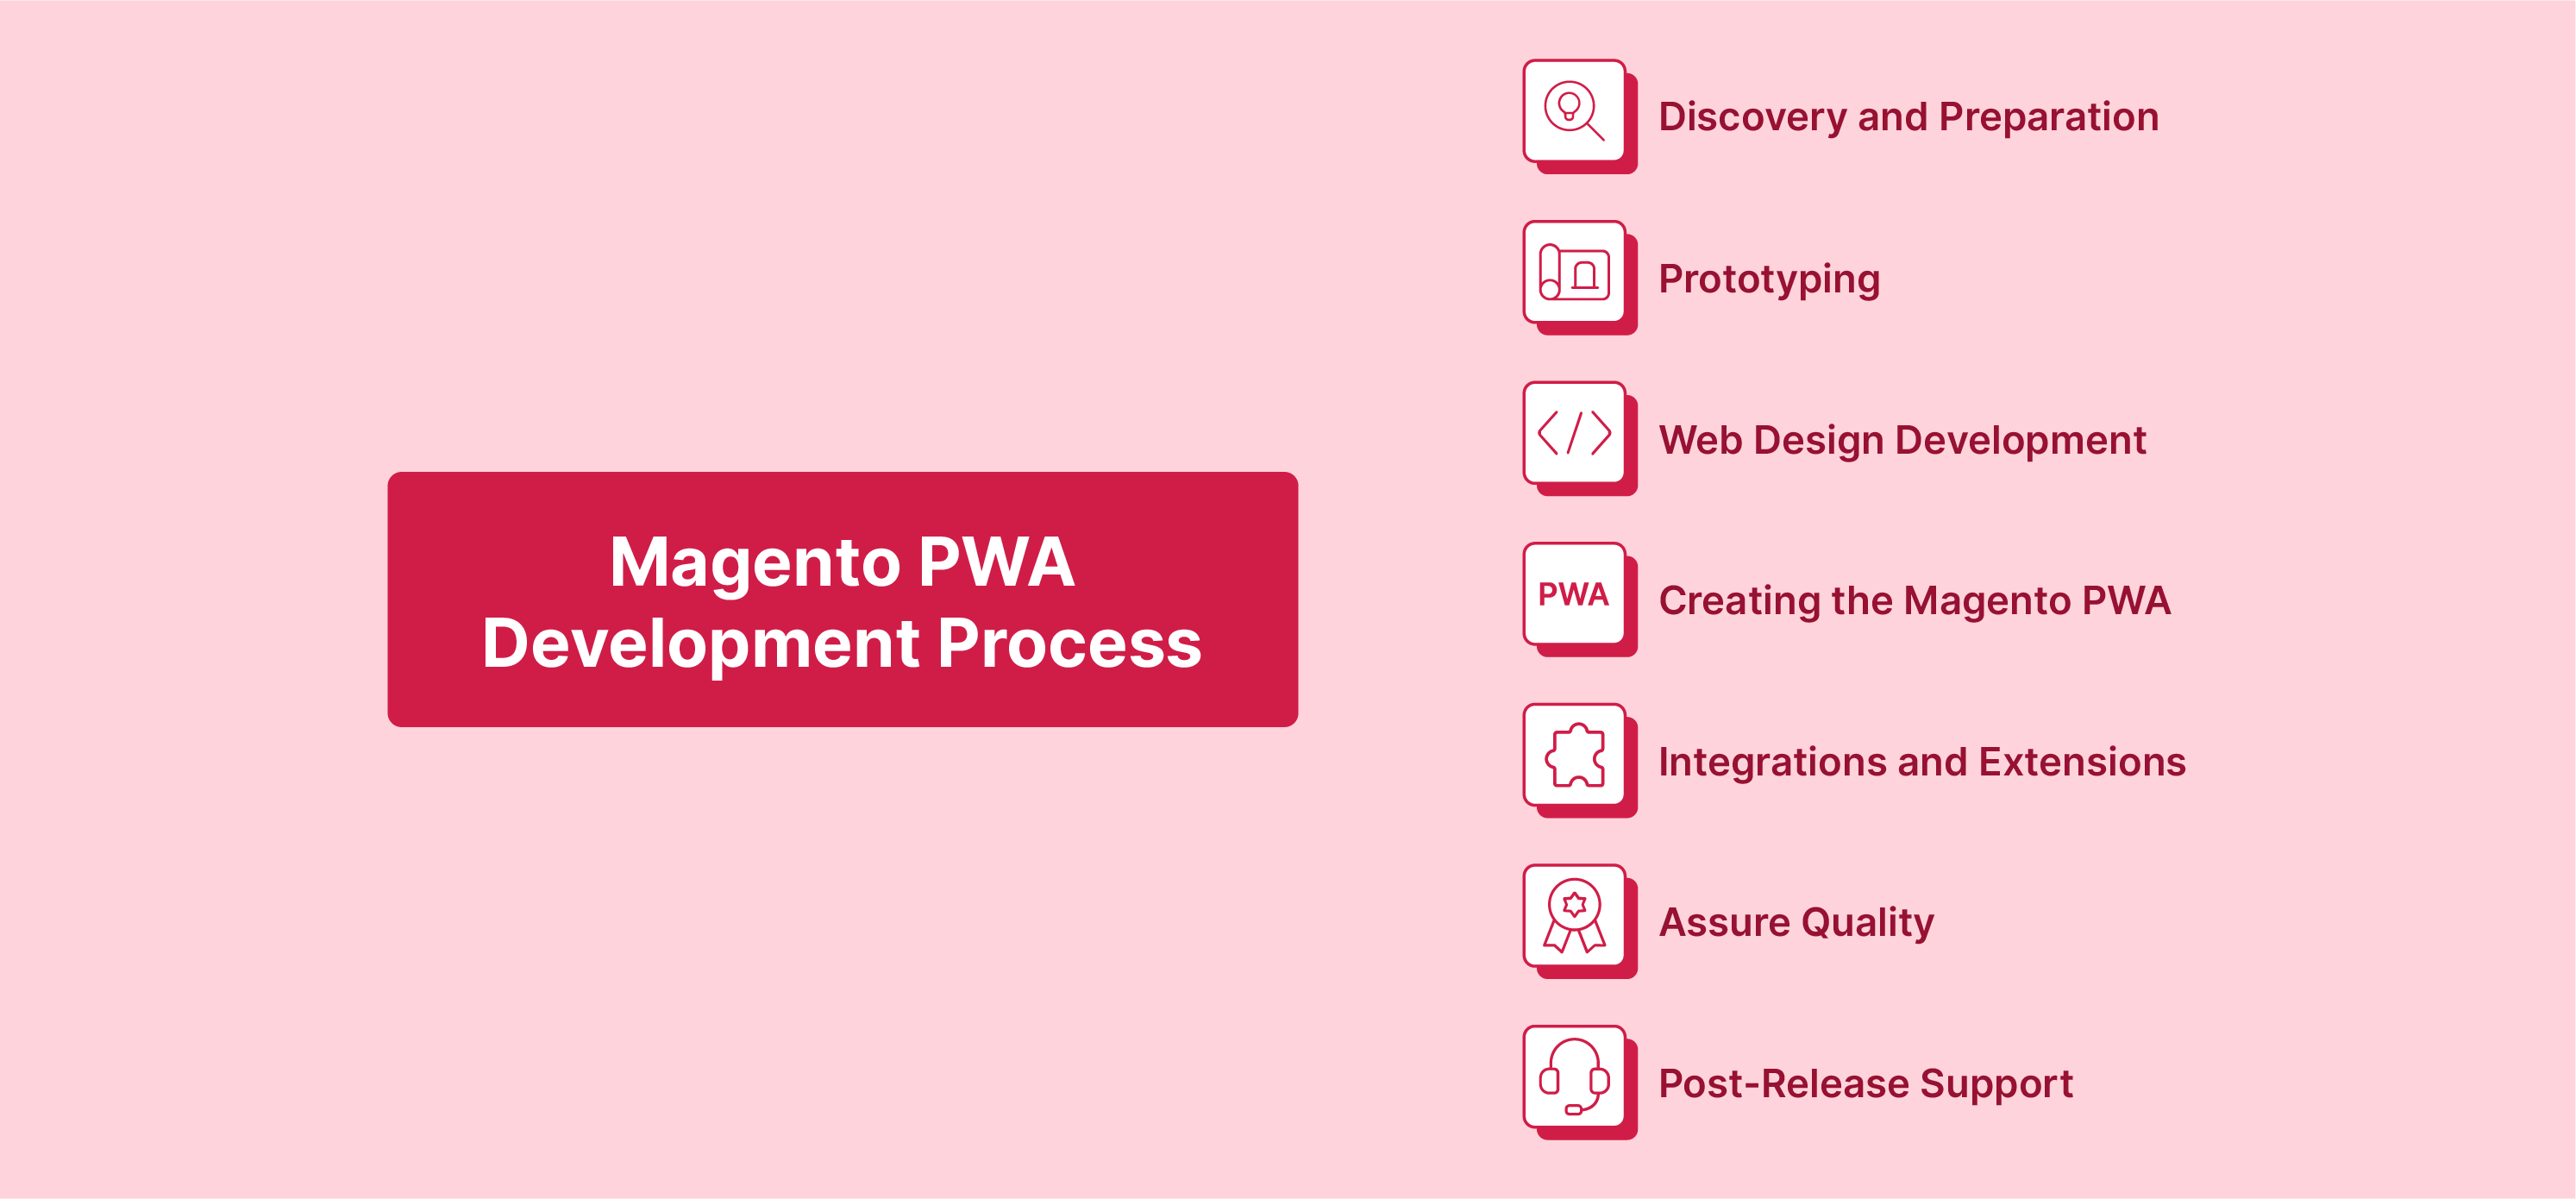 Magento PWA Development Process